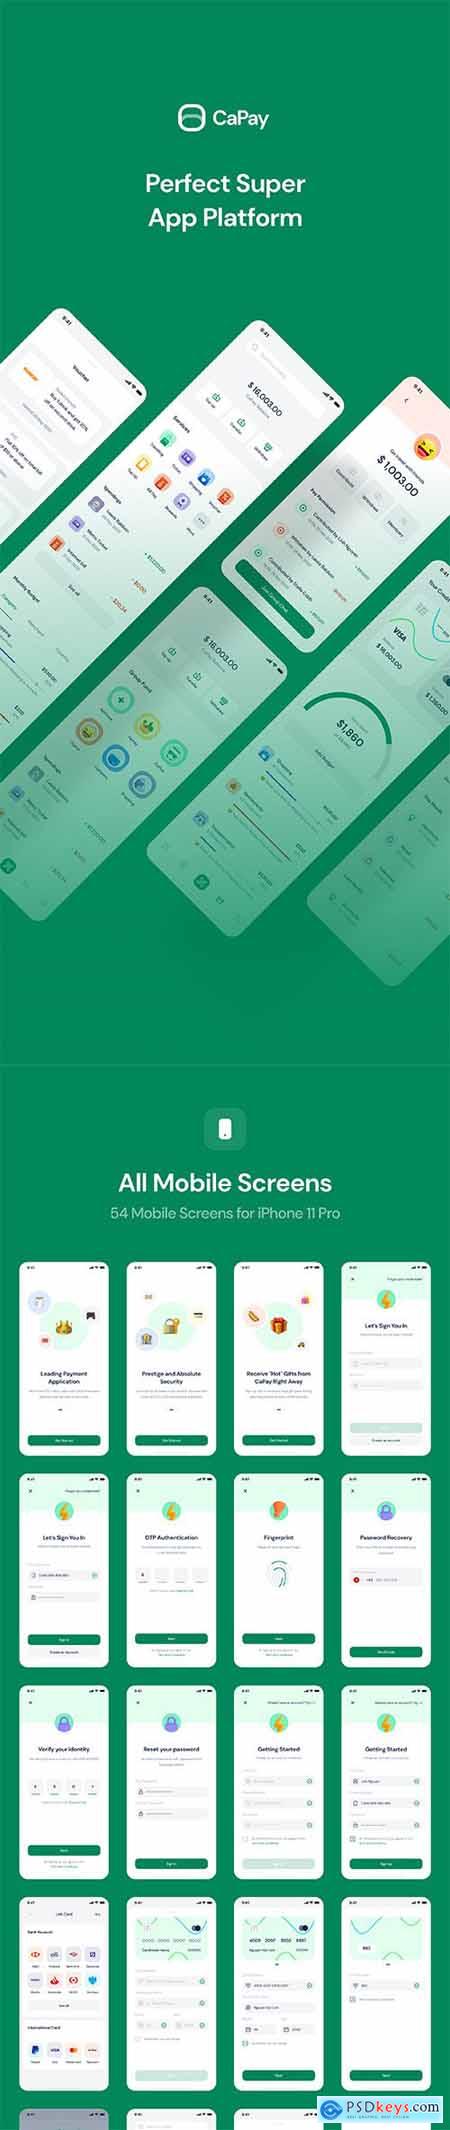 CaPay Wallet iOS UI Kit